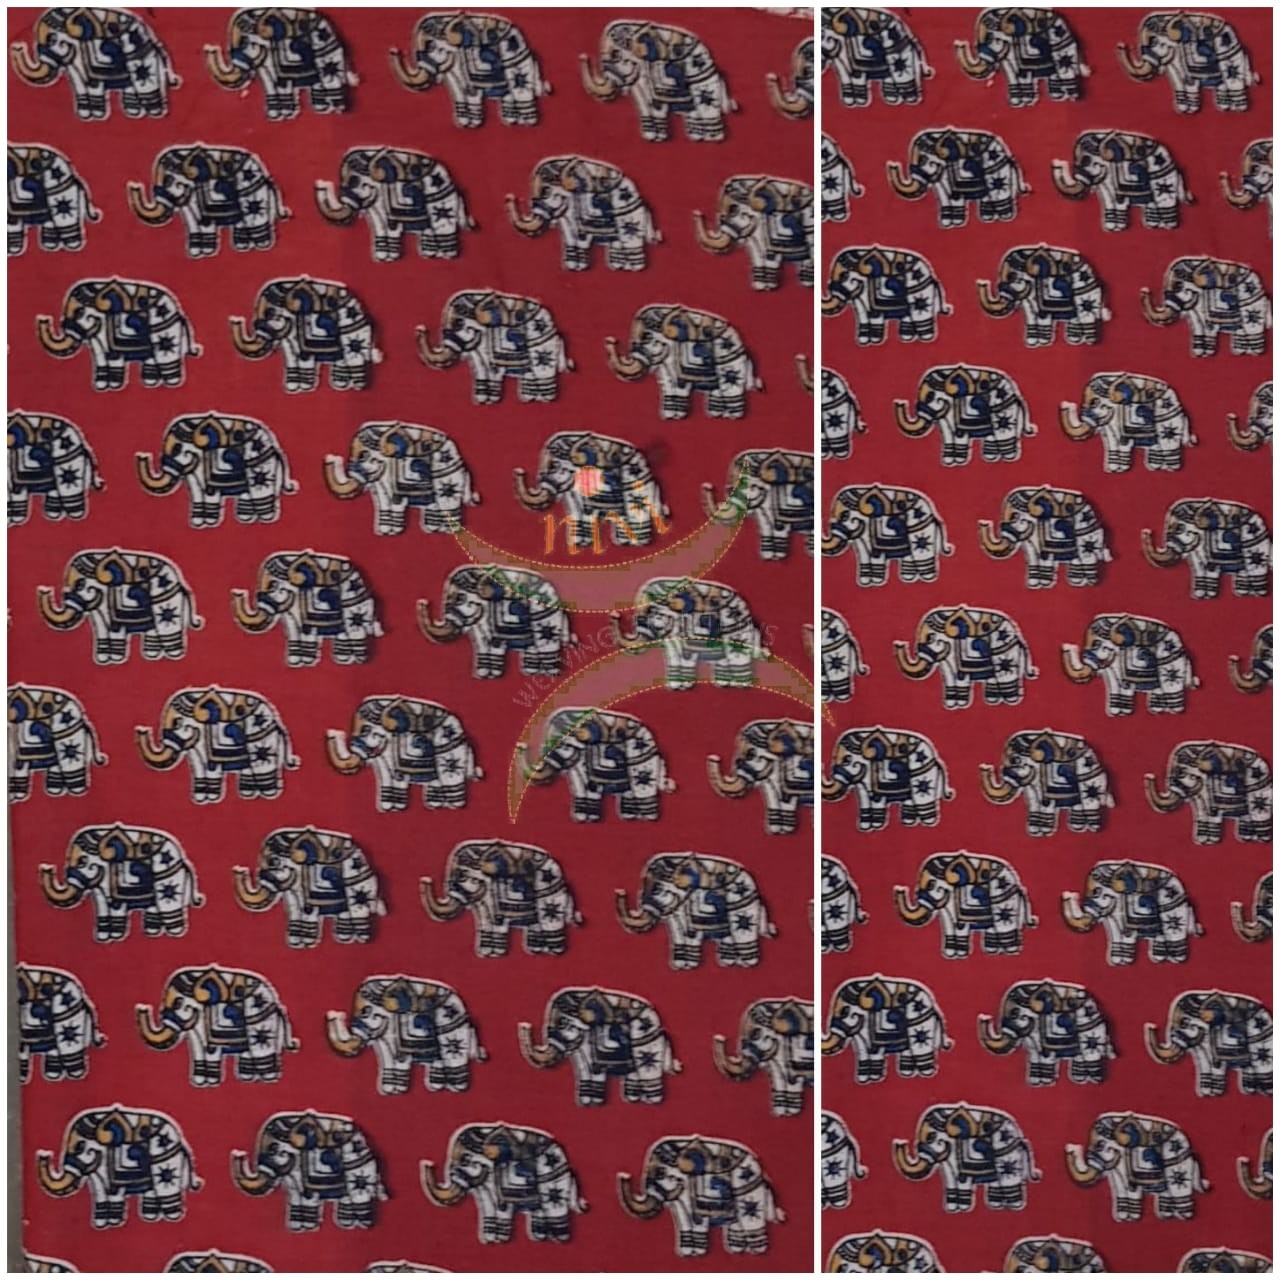 Red handloom cotton kalamkari fabric with elephant motifs